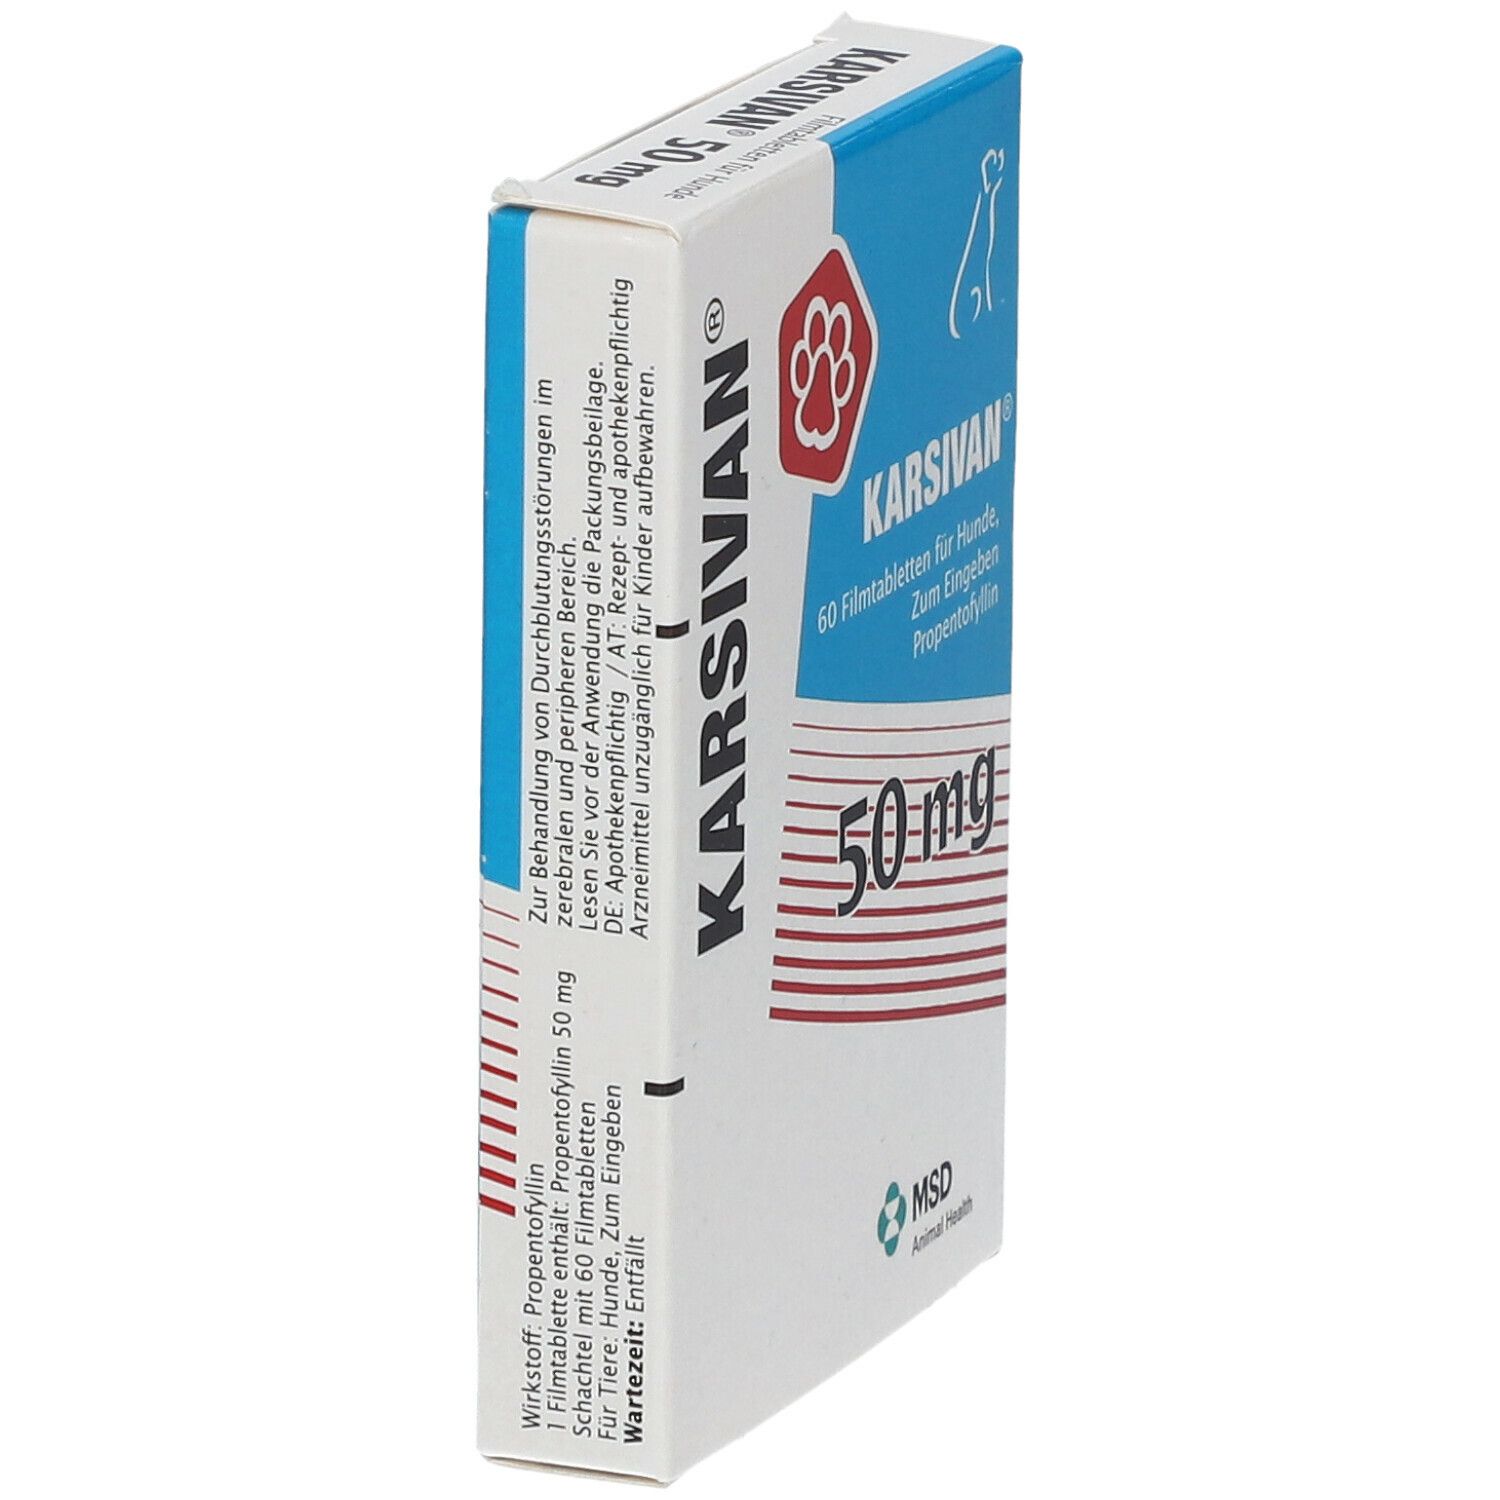 Karsivan® 50 mg Vet